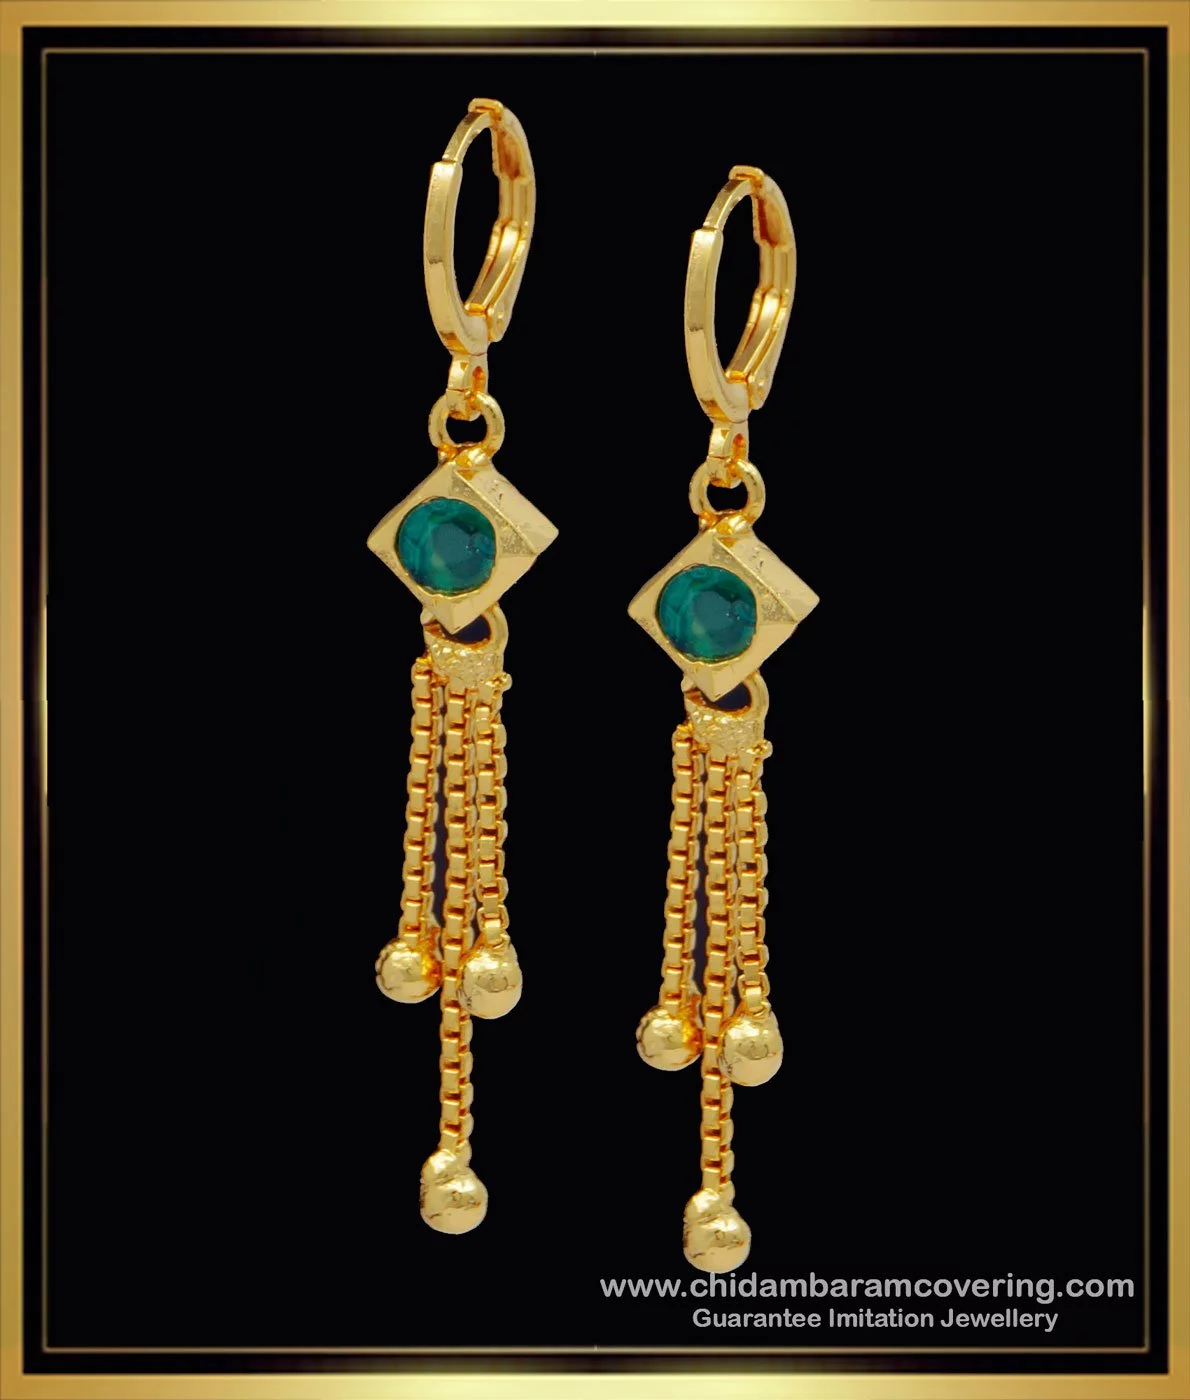 Delightful Gold Earrings Design Antique Temple Nagas Models Trending  Imitation ER22912